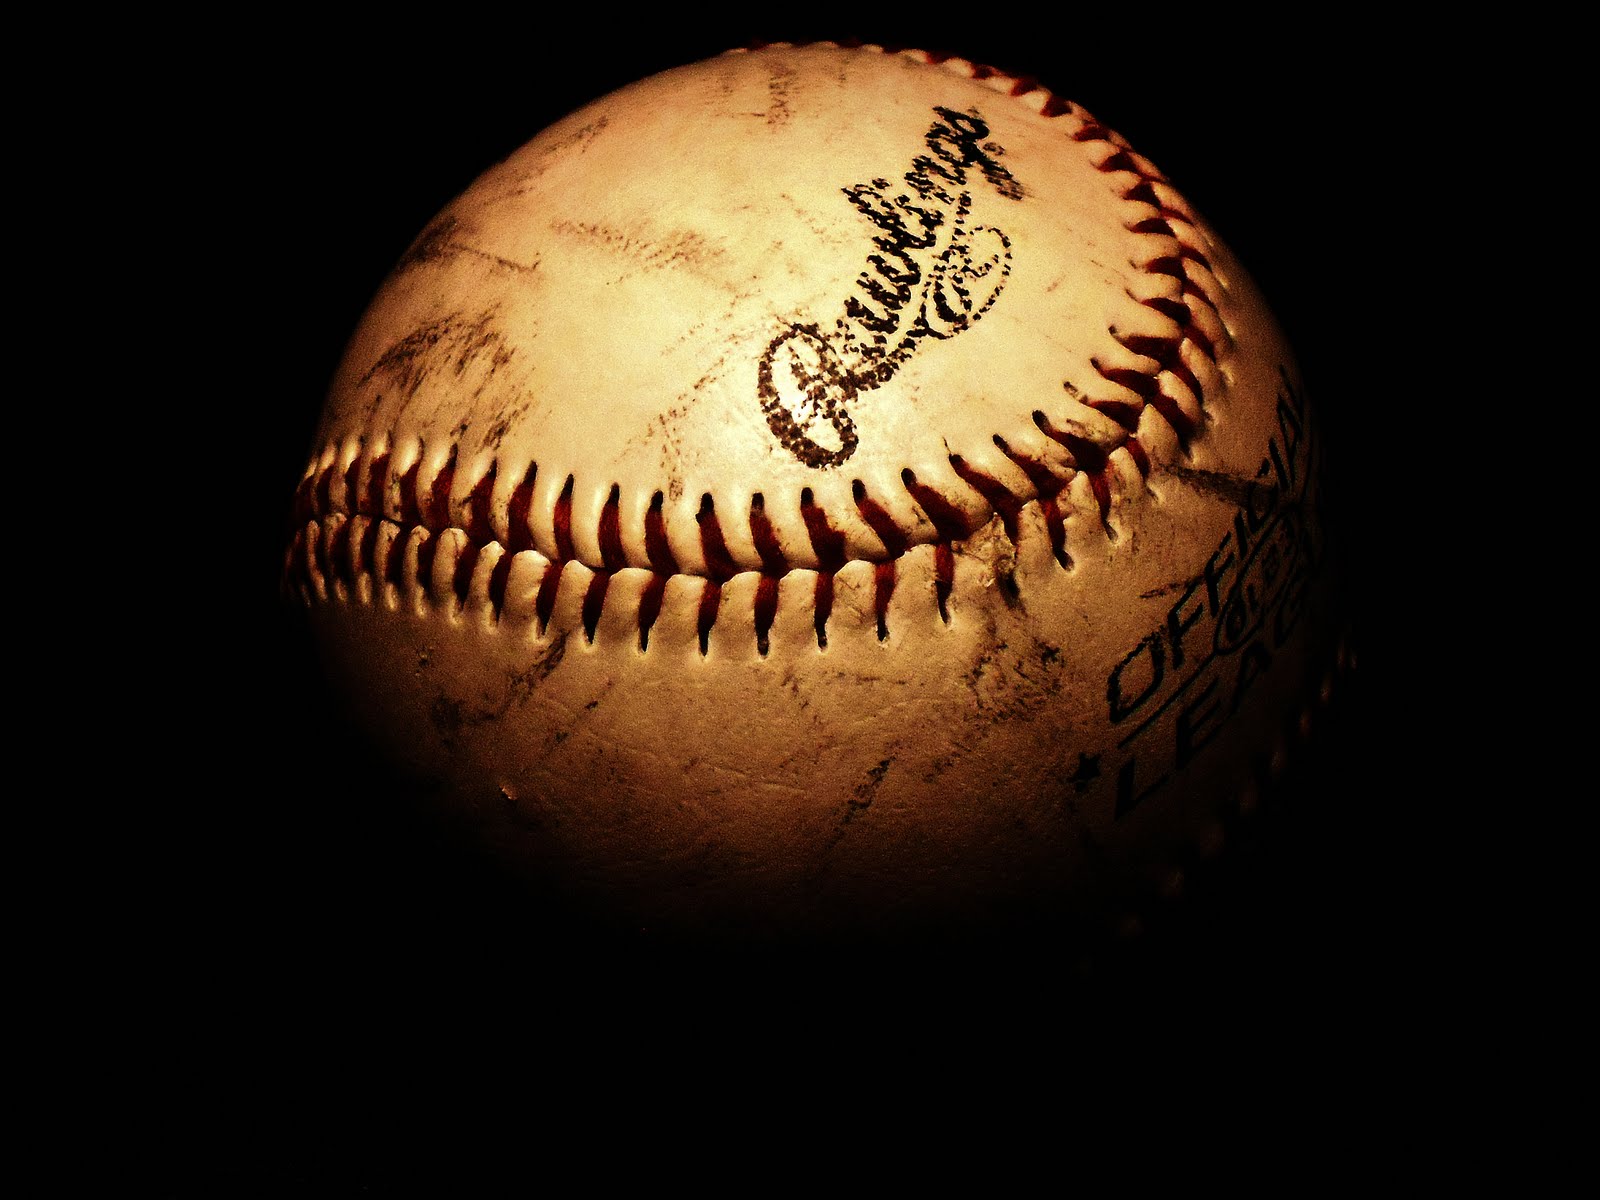 Baseball 745338 1600x1200px by Josh McGrotty